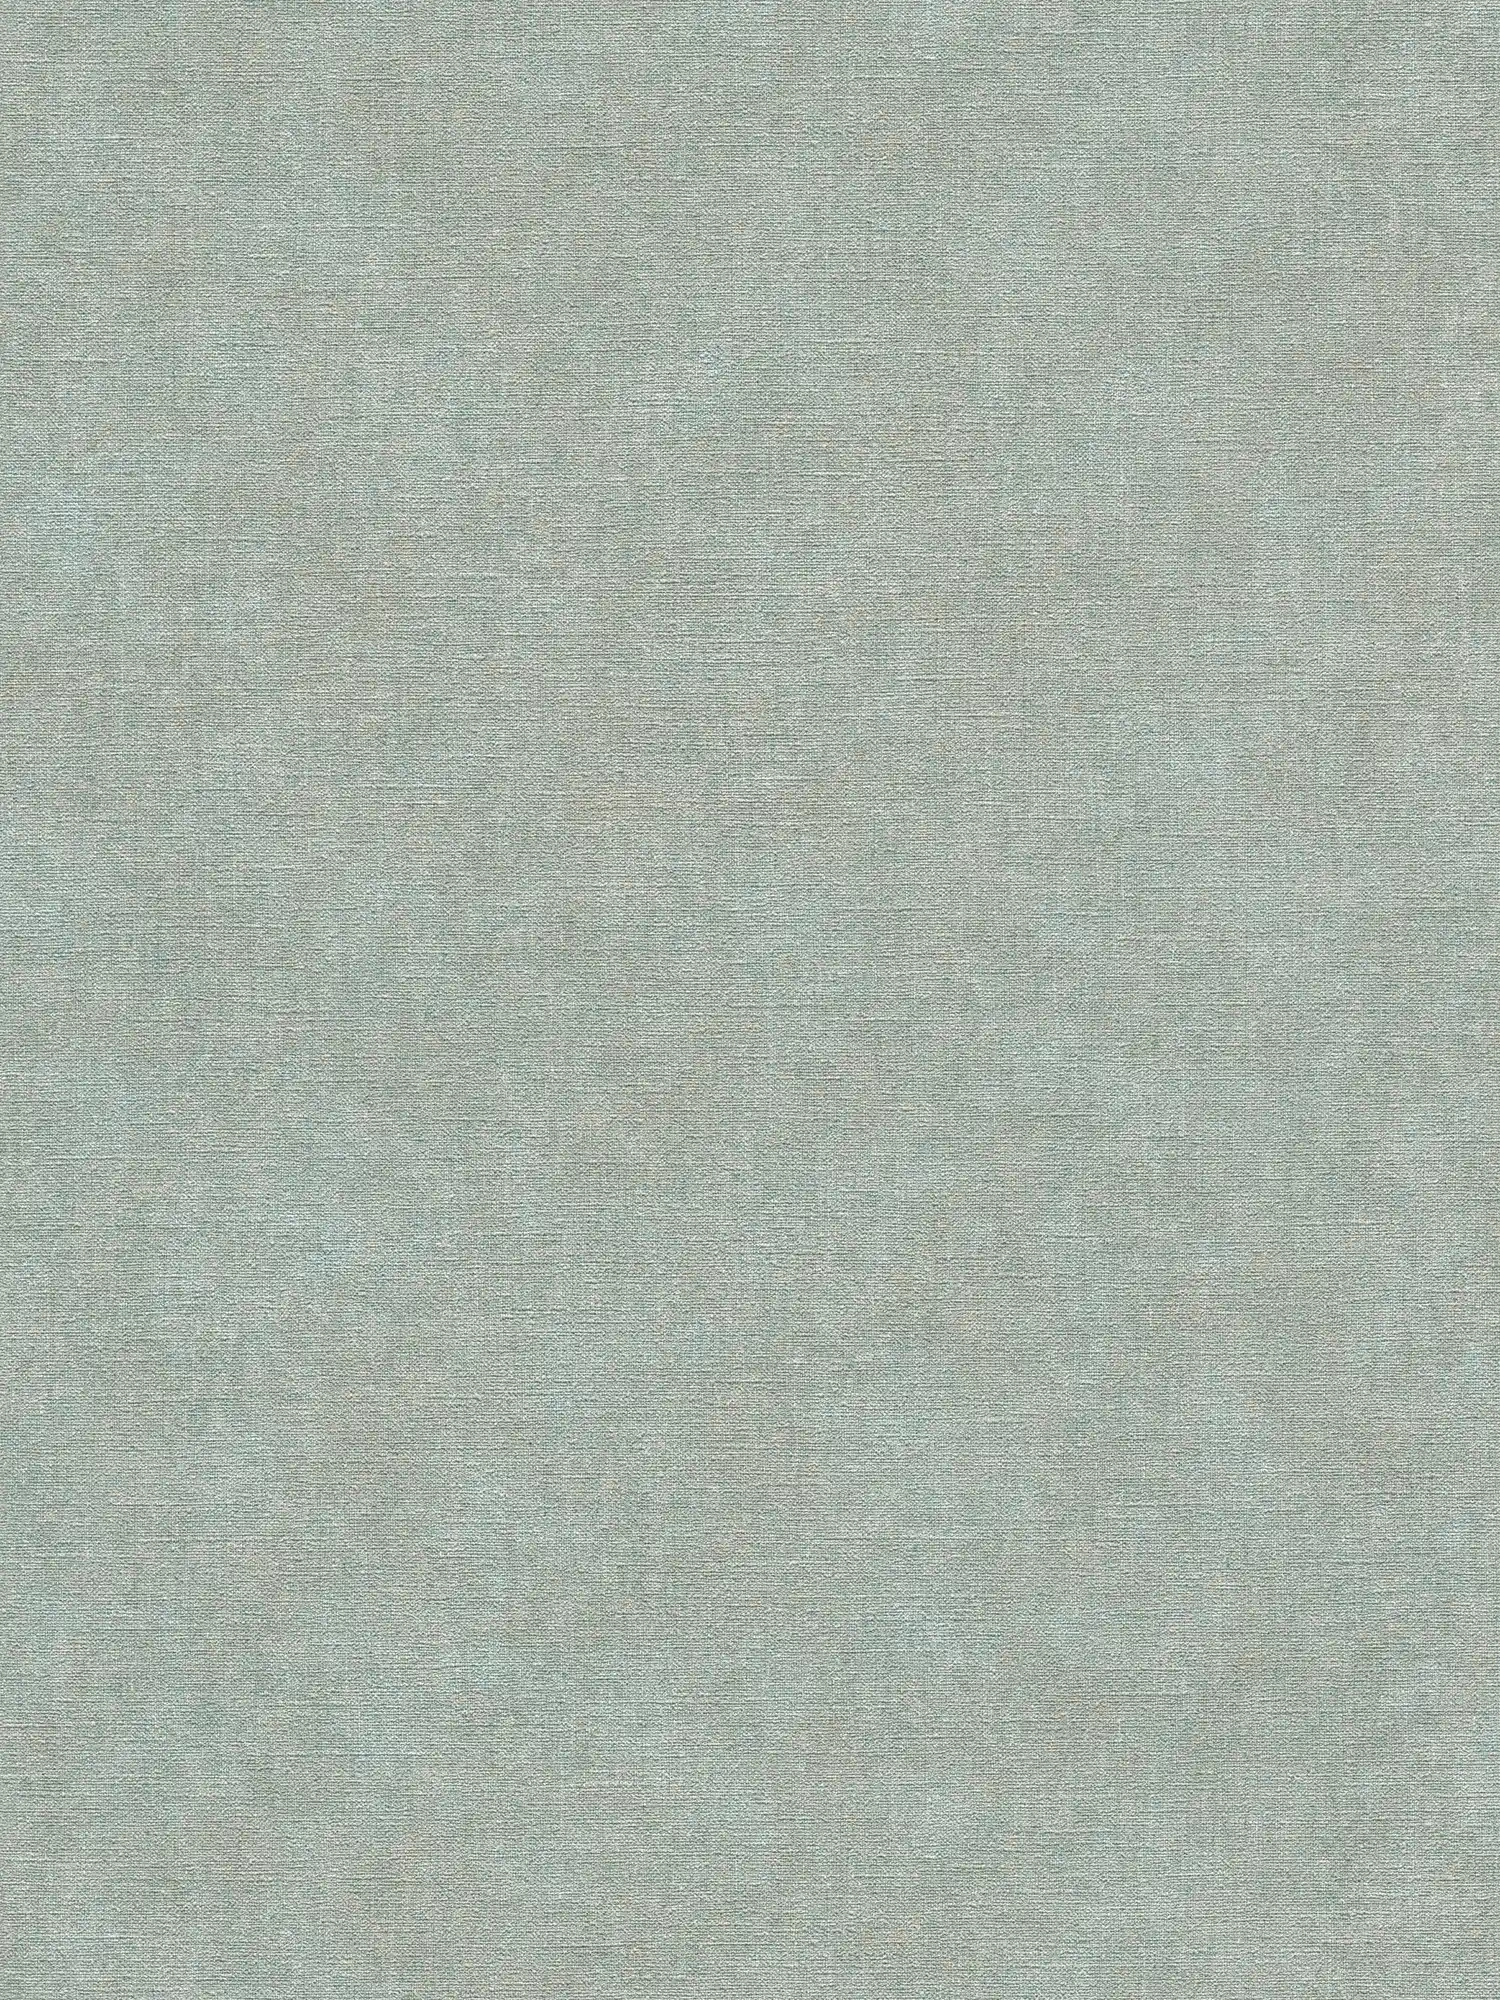 Carta da parati non tessuta con texture leggera in look gesso - beige, marrone, blu
